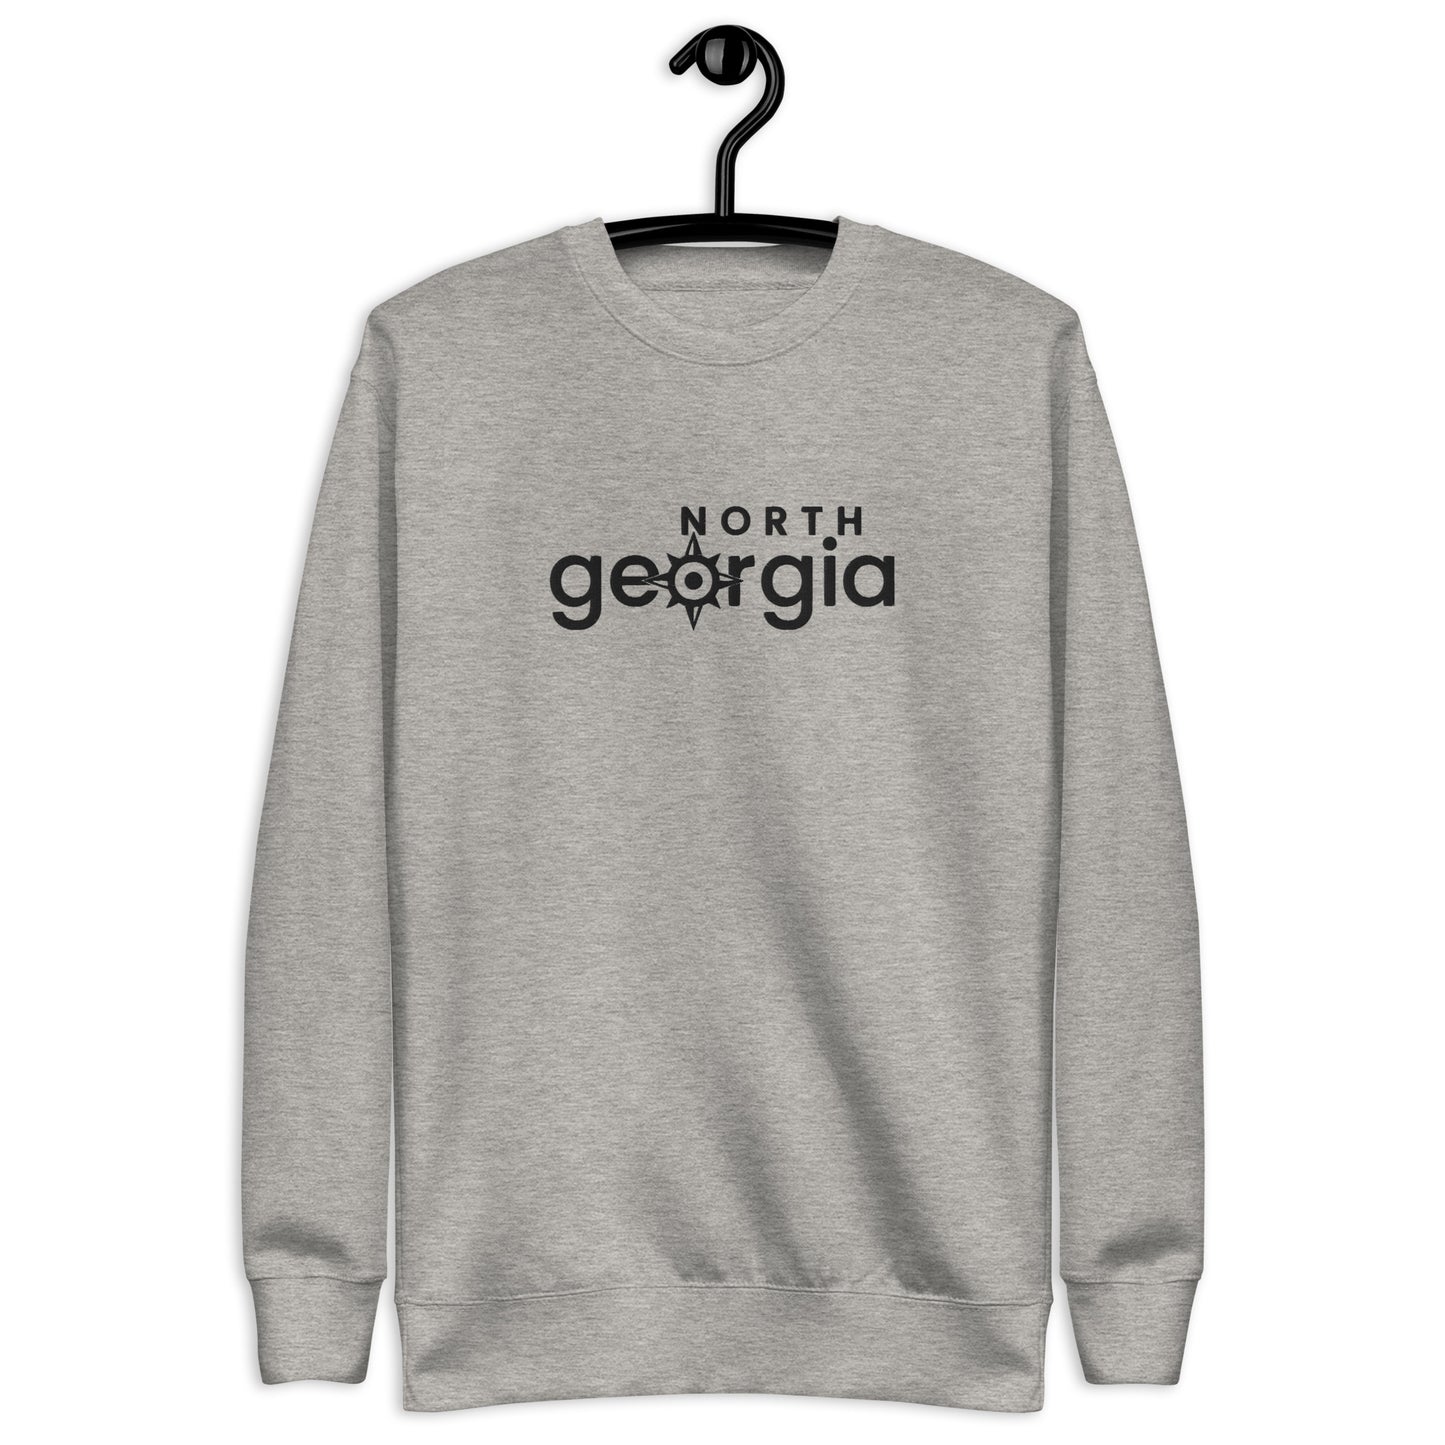 North Georgia Embroidered Unisex Premium Sweatshirt